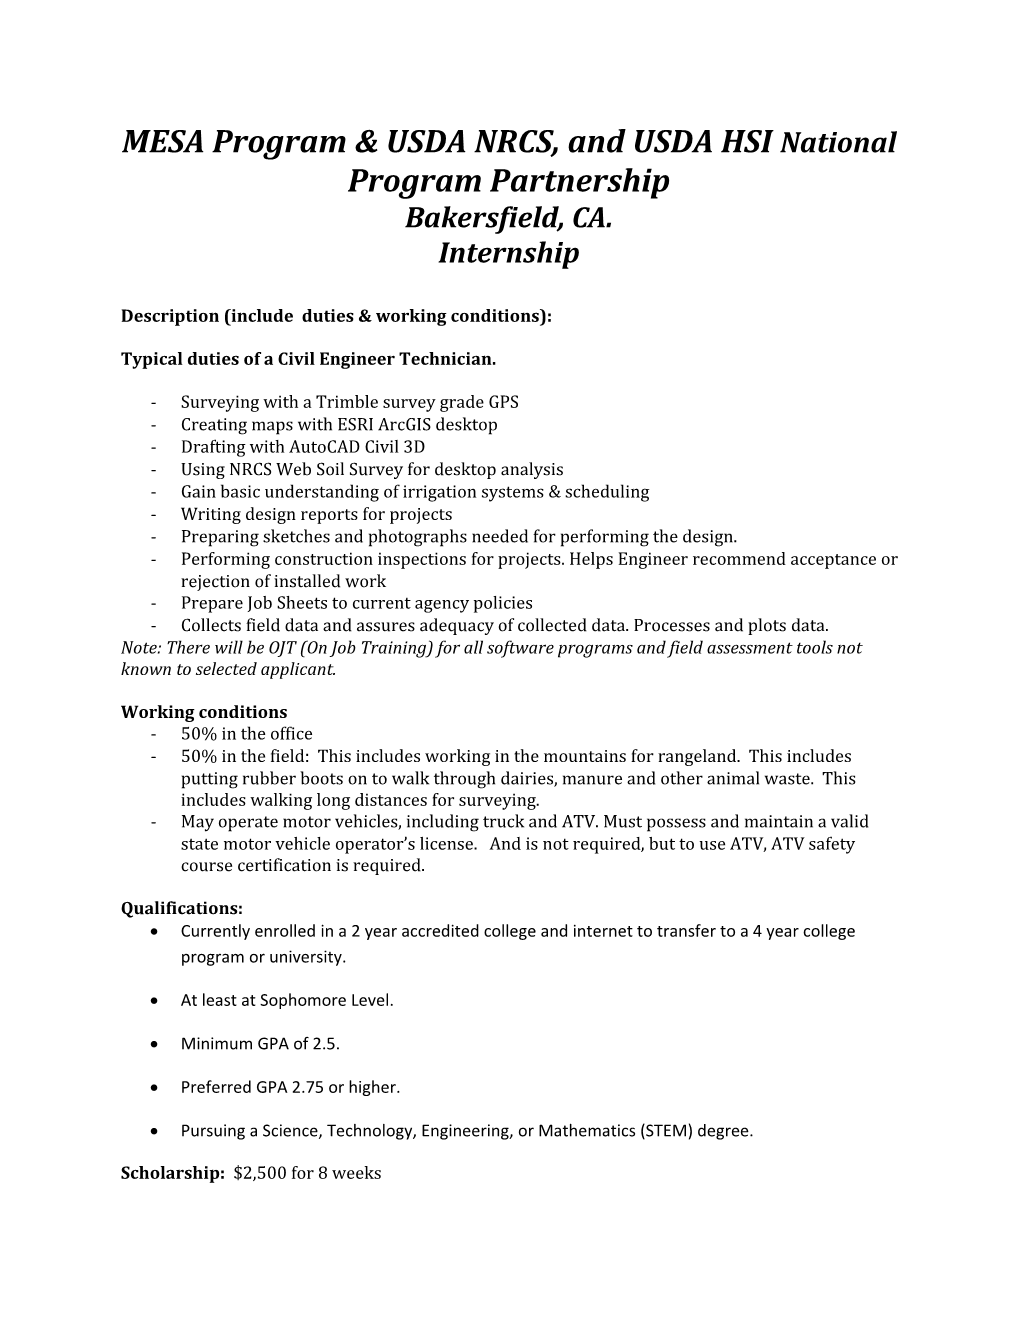 MESA Program & USDA NRCS, and USDA HSI National Program Partnership